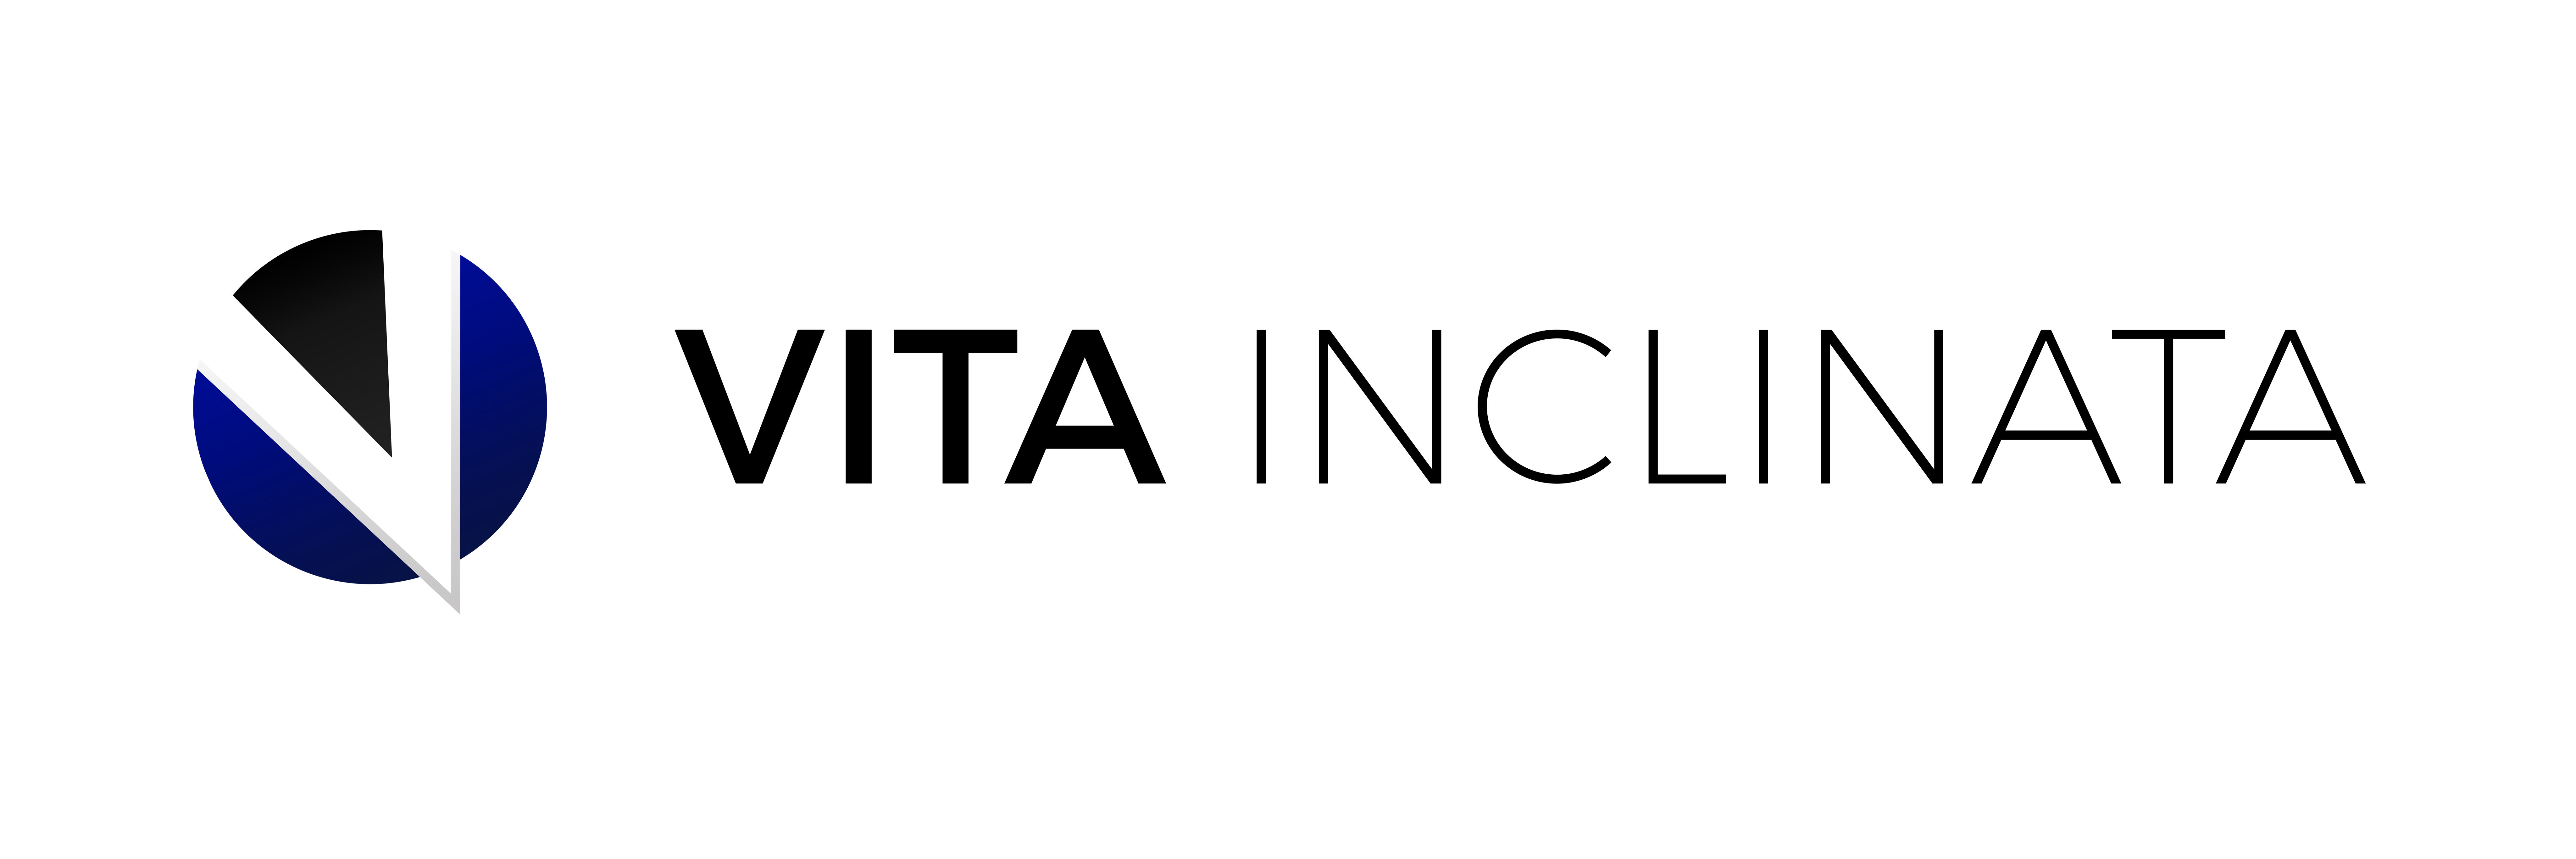 Vita Inclinata Logo